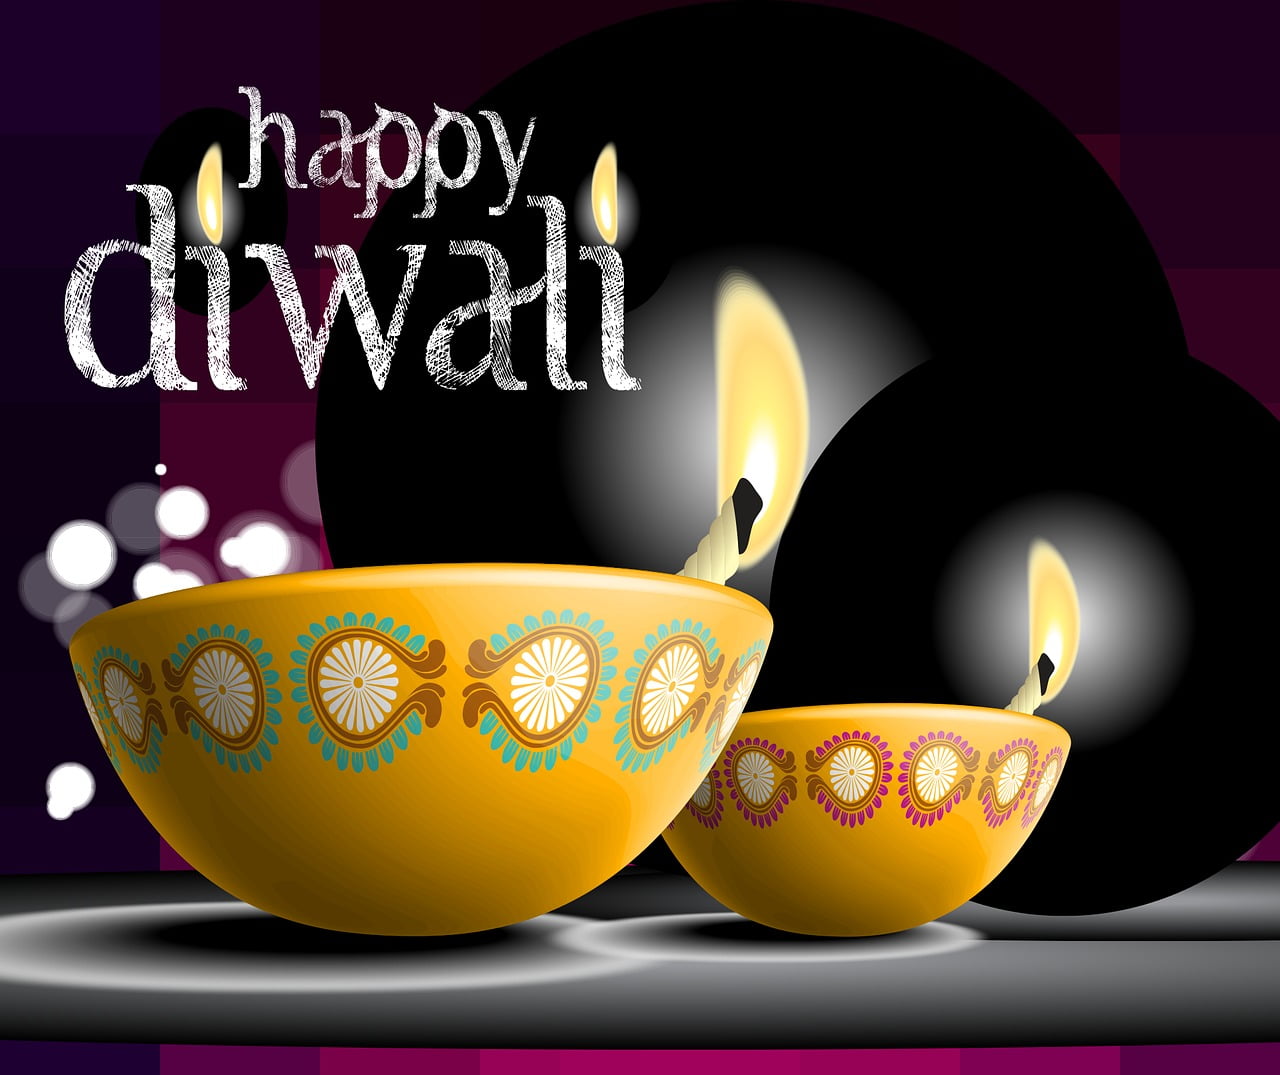 diwali, text, food and drink, celebration, mug, illuminated